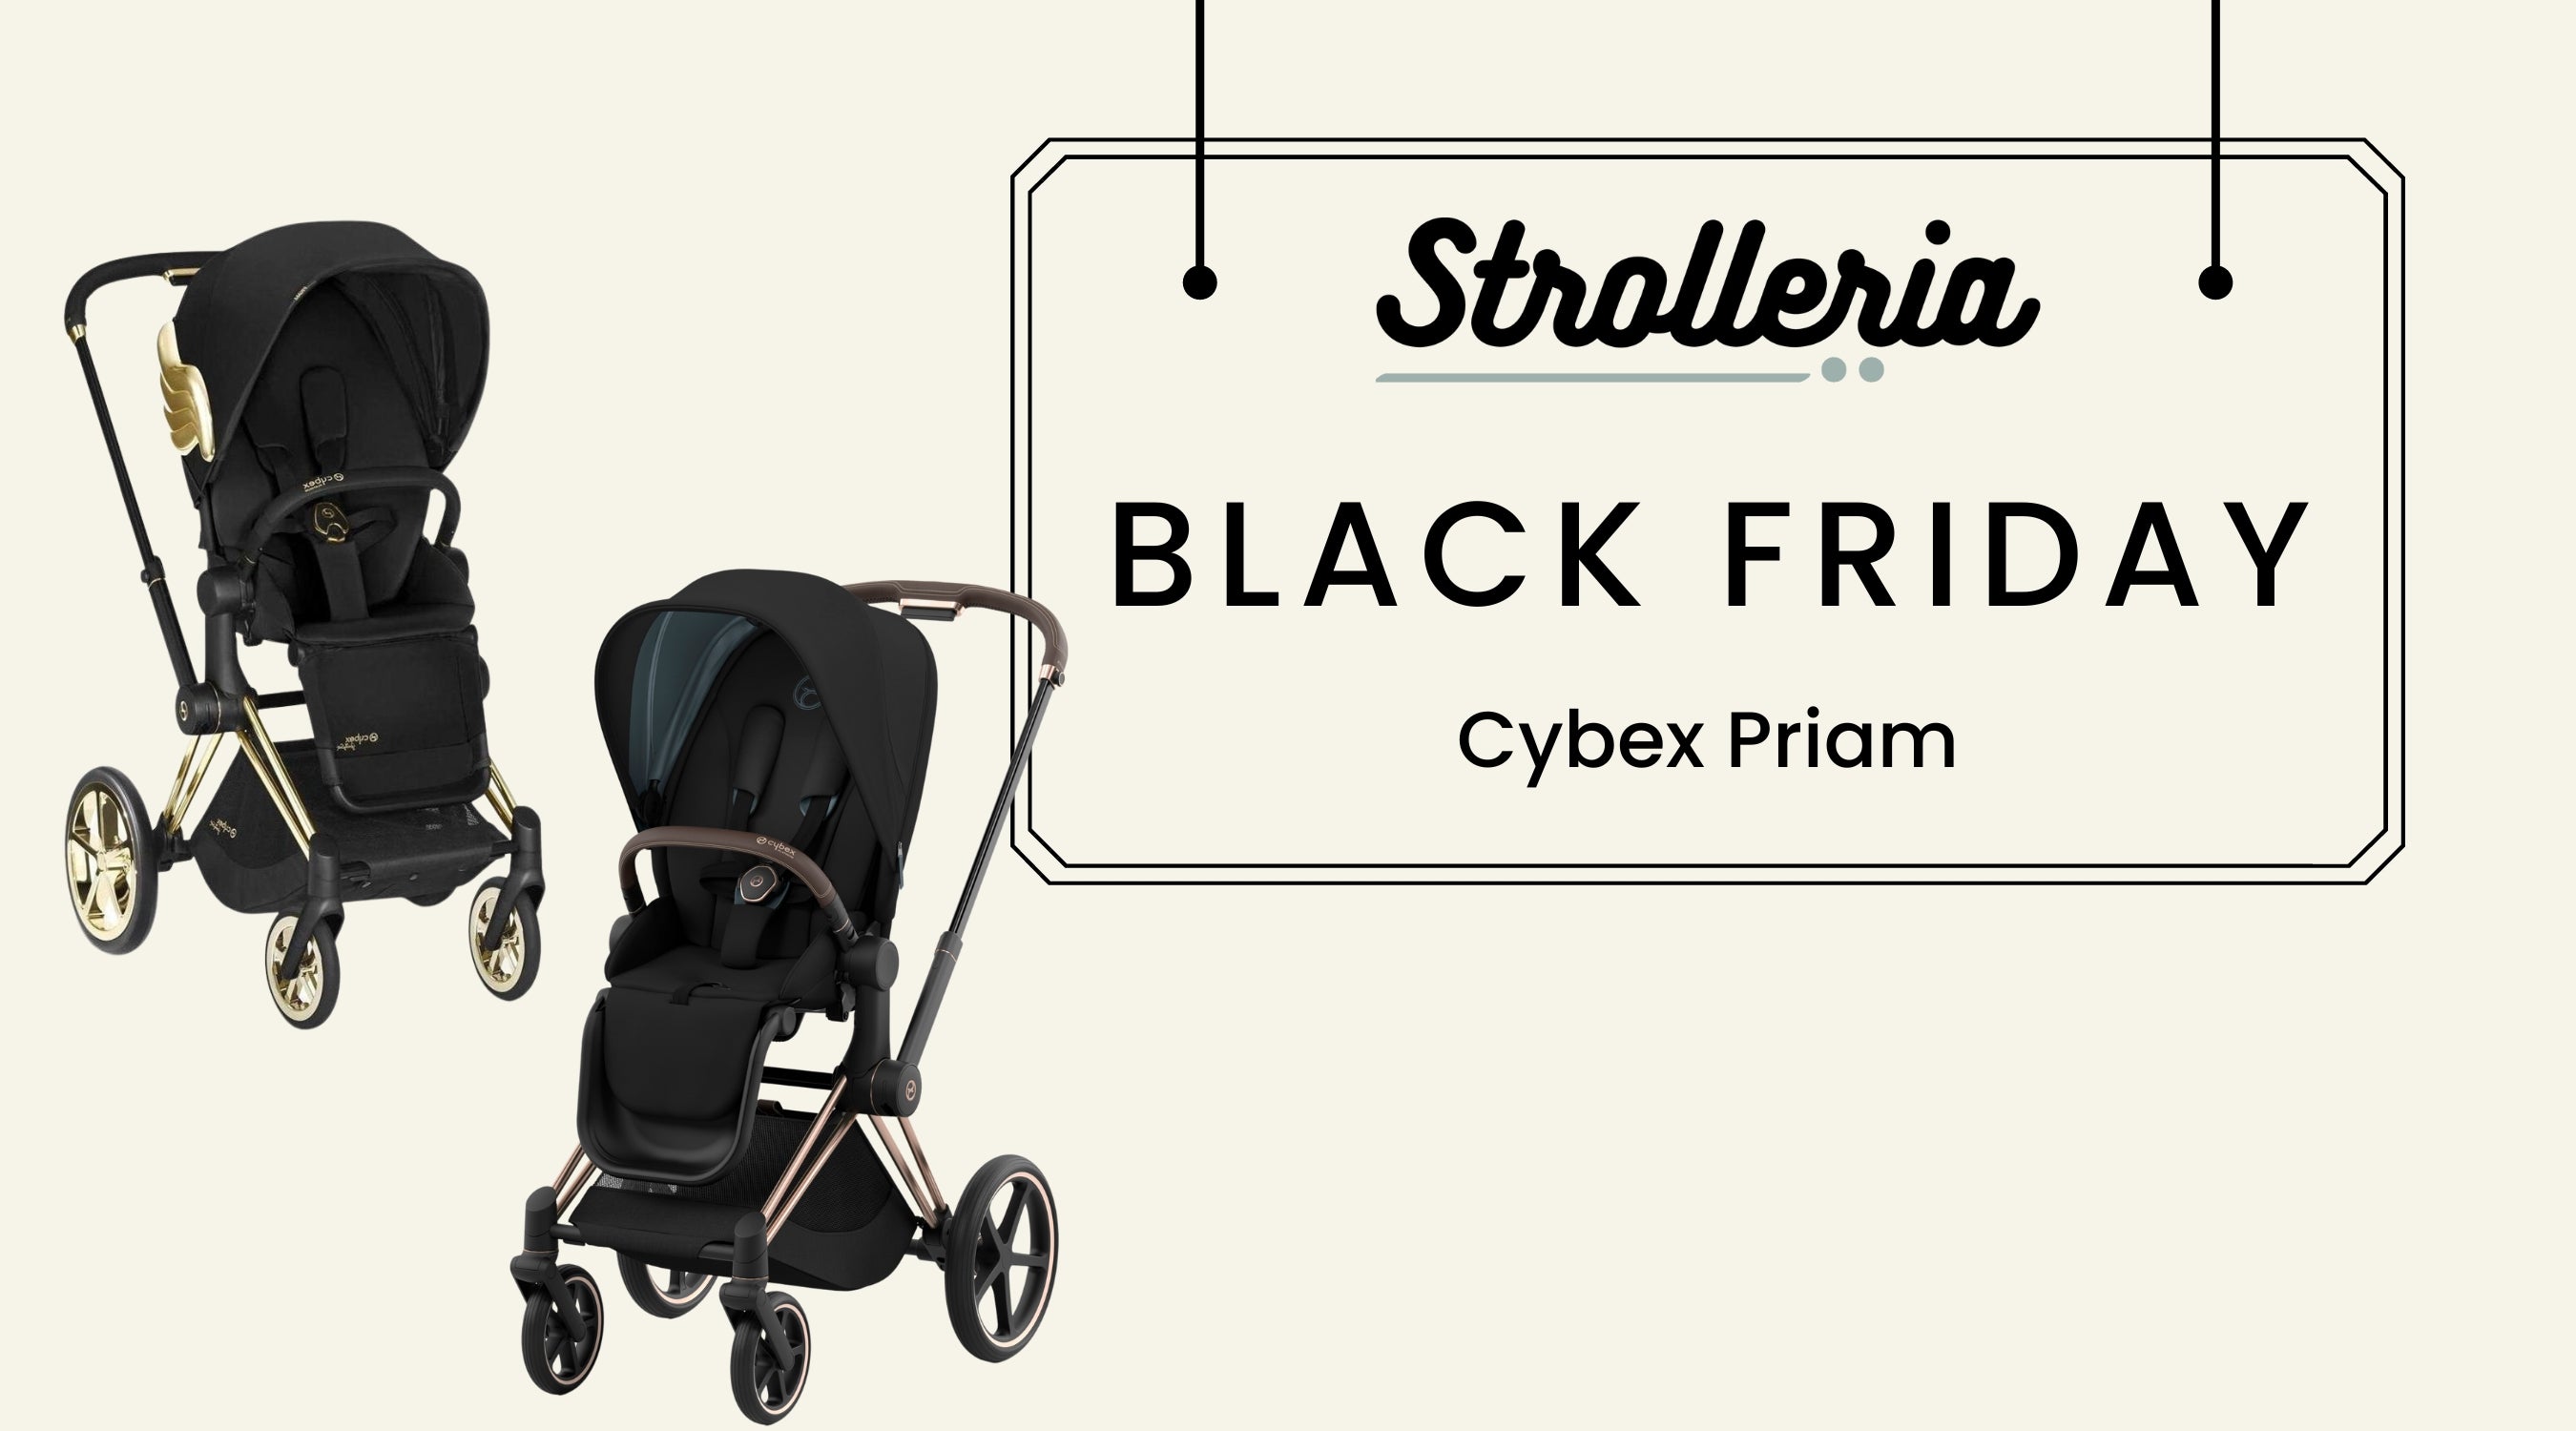 Cybex Priam Black Friday Sales